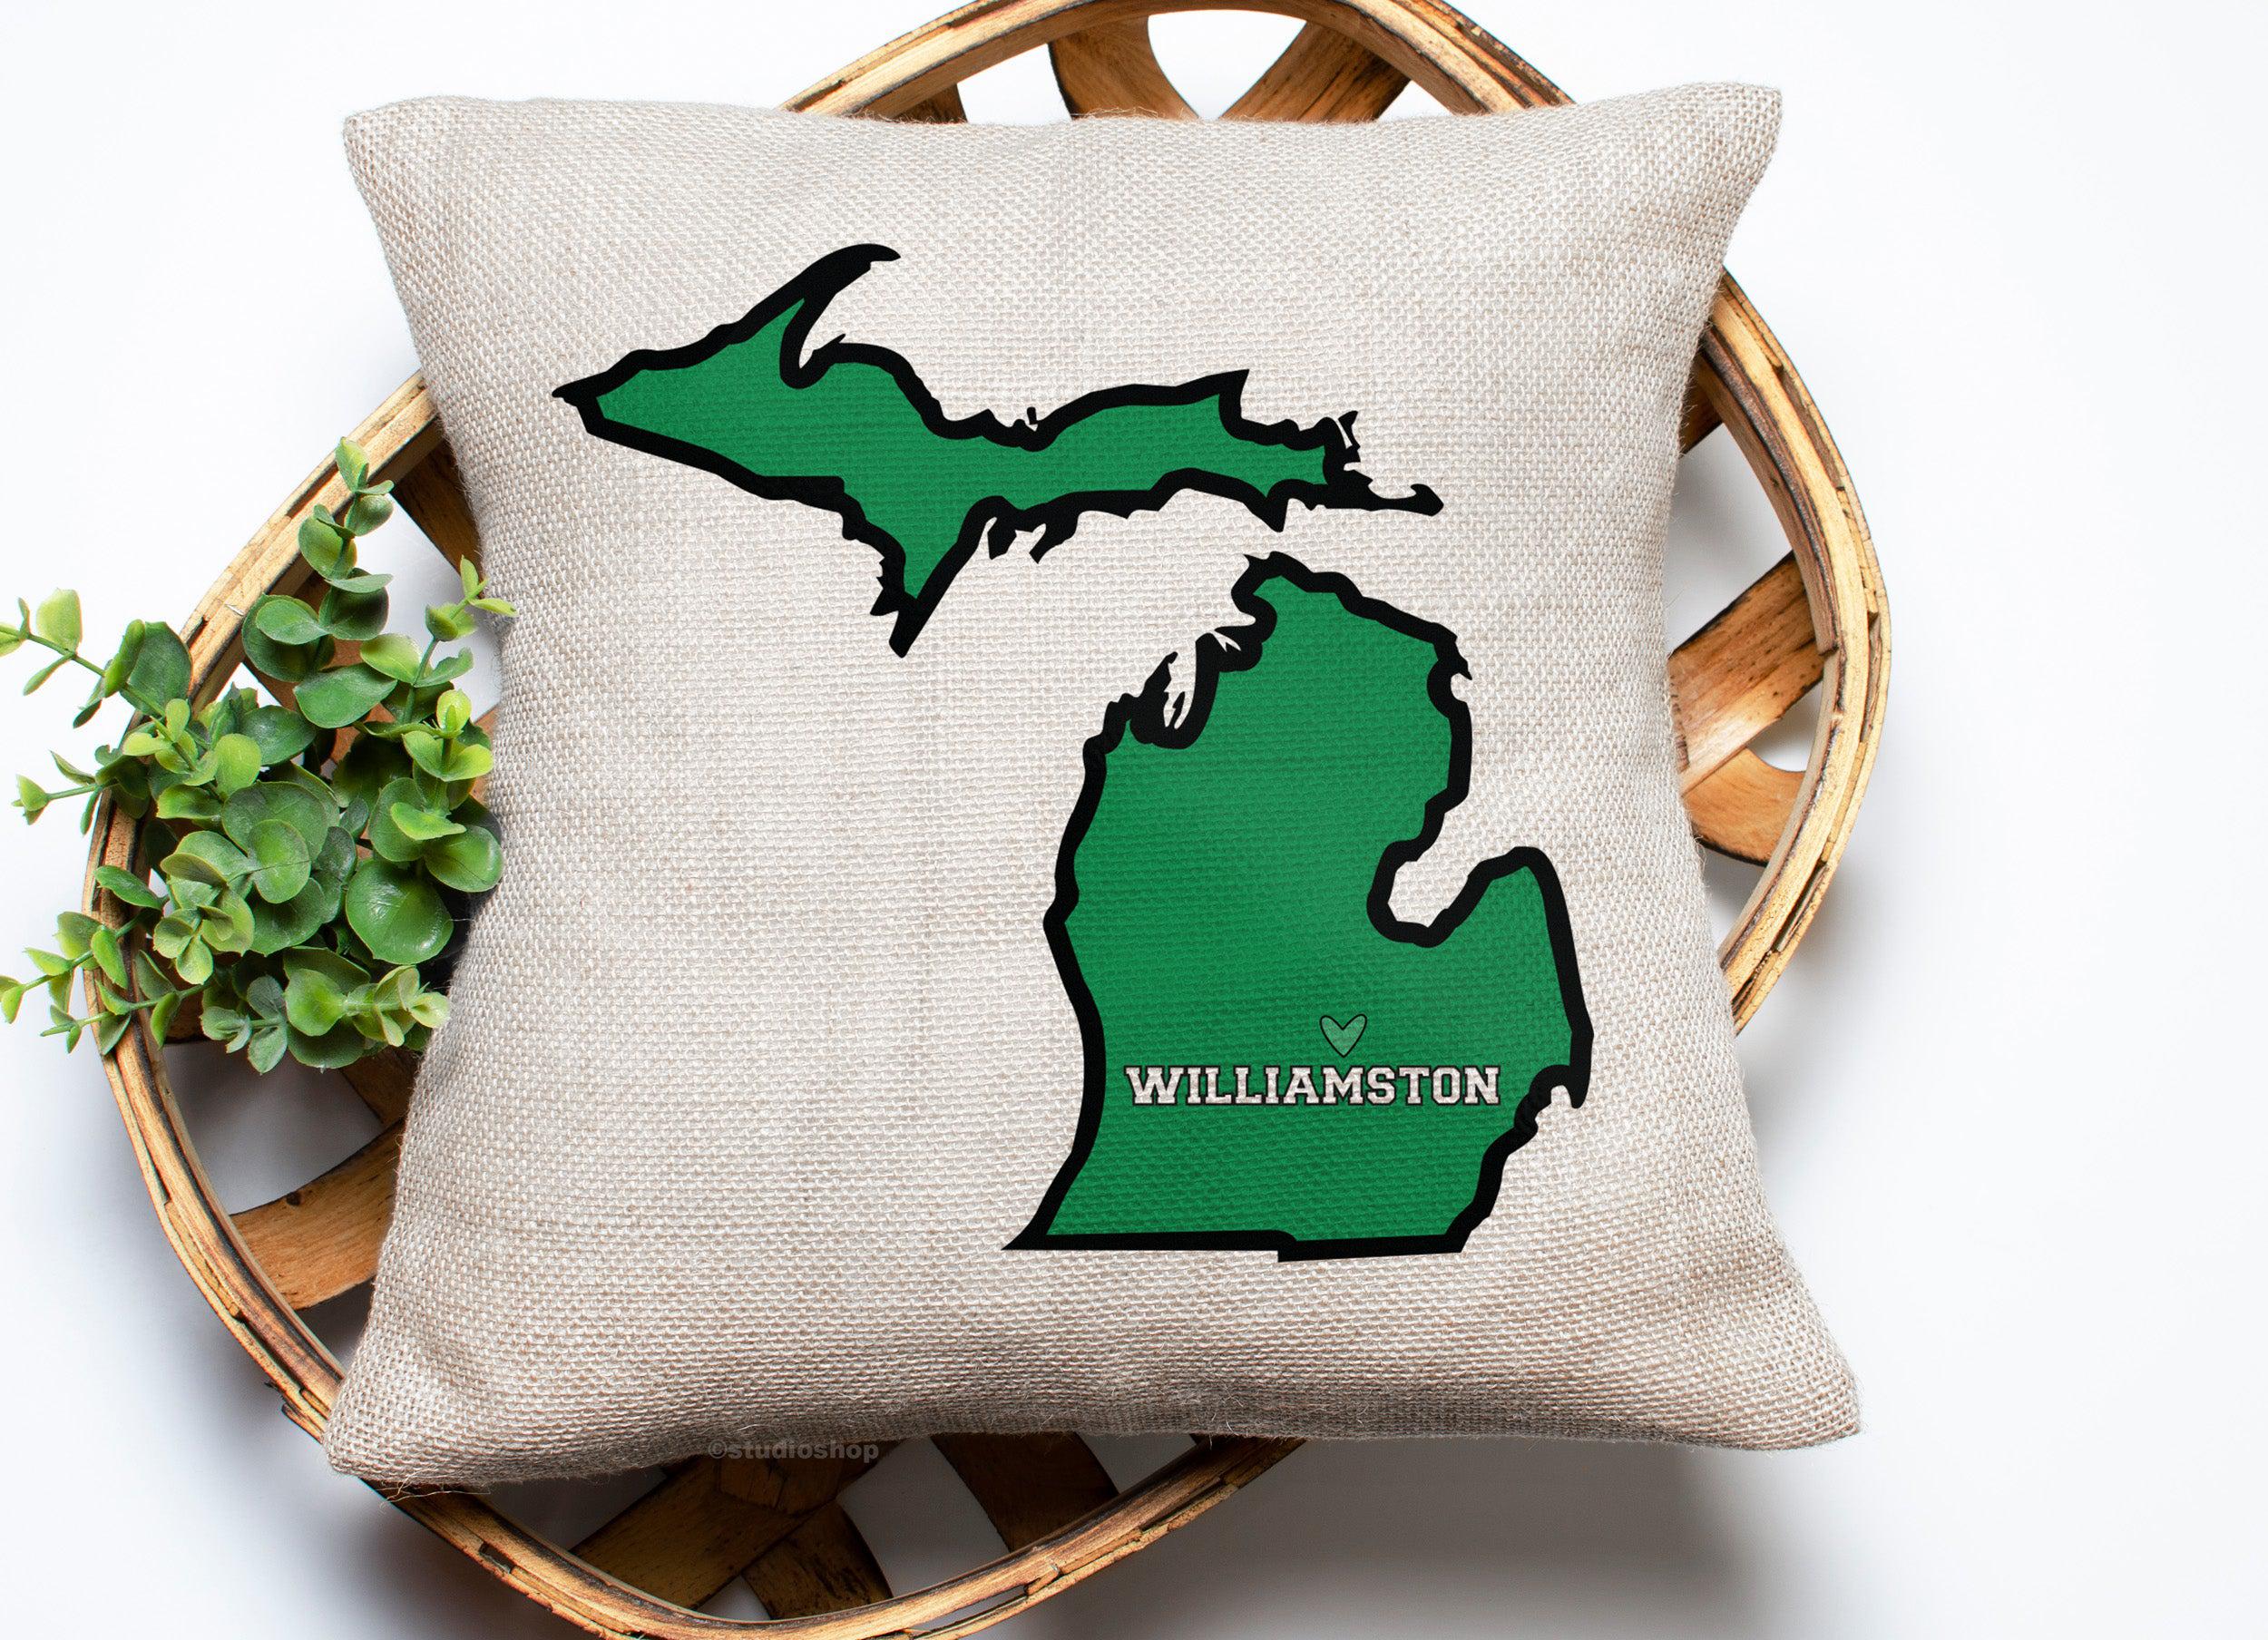 Williamston Michigan Pillow